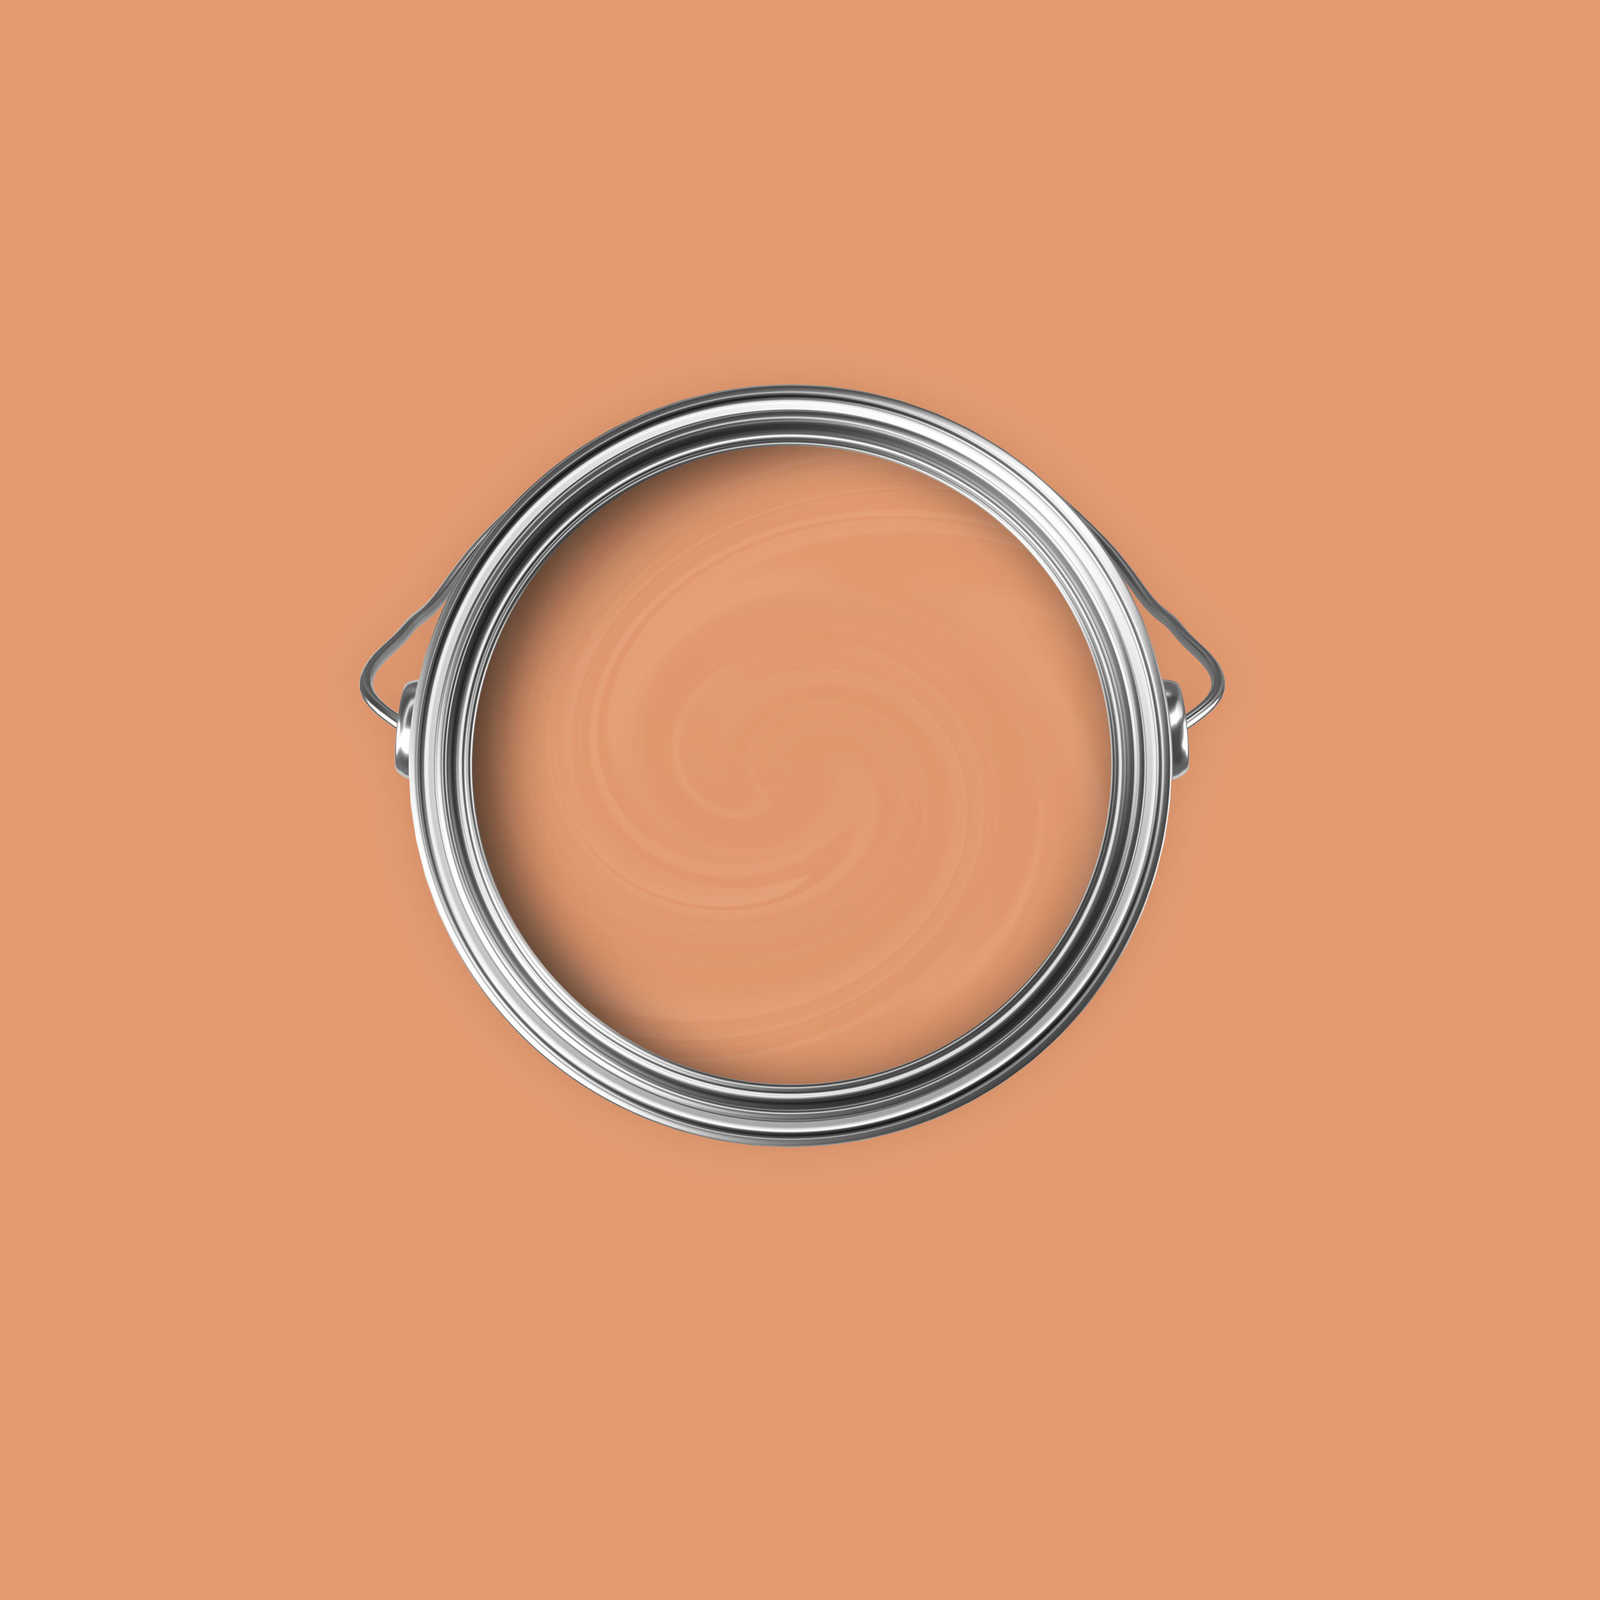             Premium Wall Paint refreshing apricot »Pretty Peach« NW902 – 2,5 litre
        